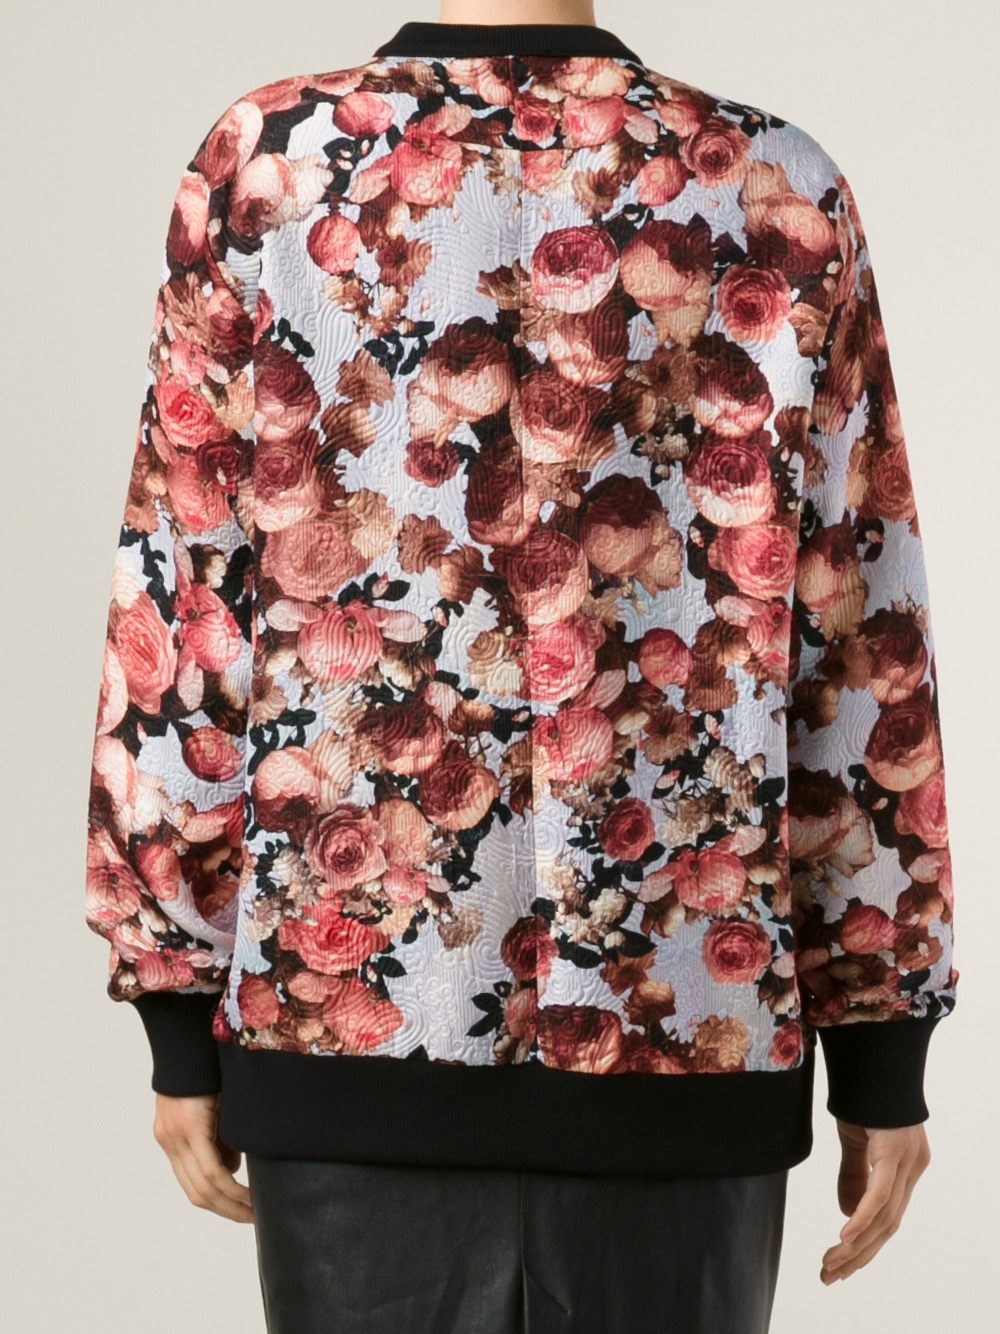 Lyst - Givenchy Rose Print Sweatshirt